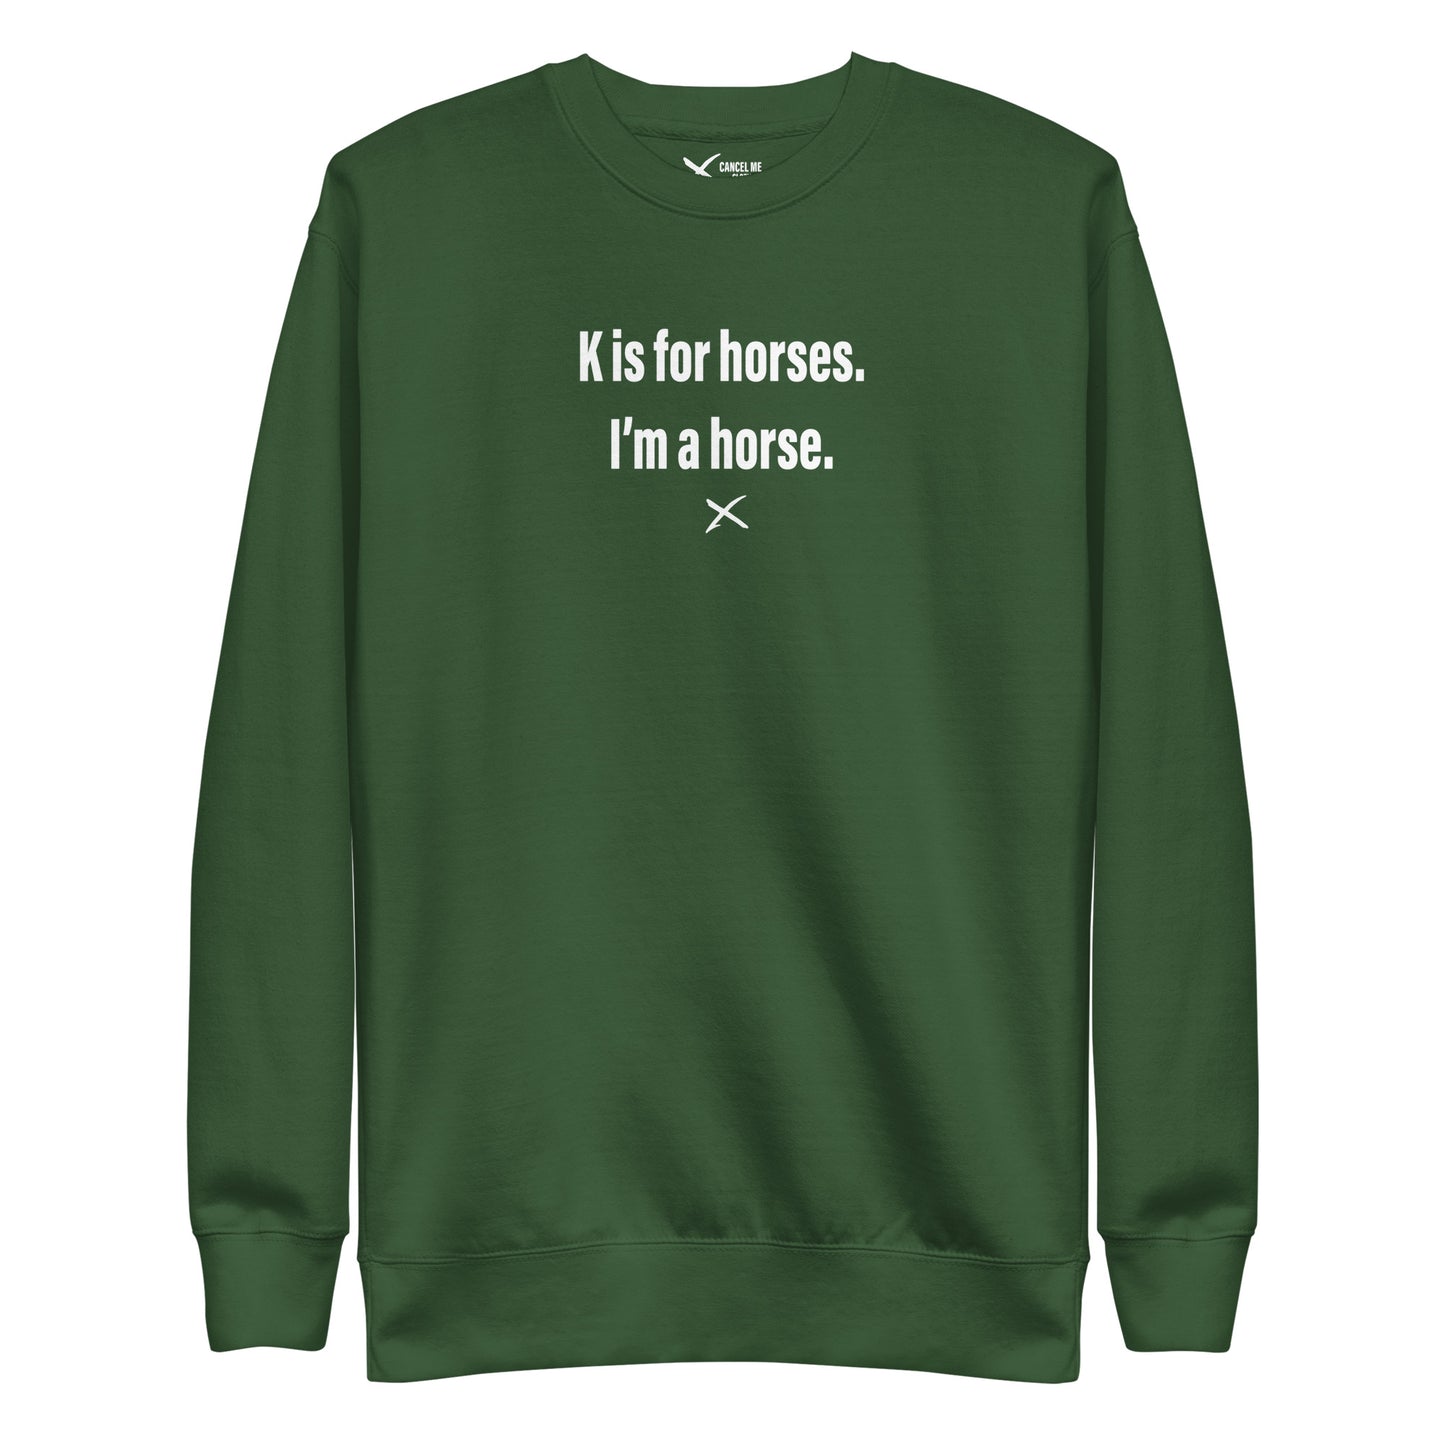 K is for horses. I'm a horse. - Sweatshirt